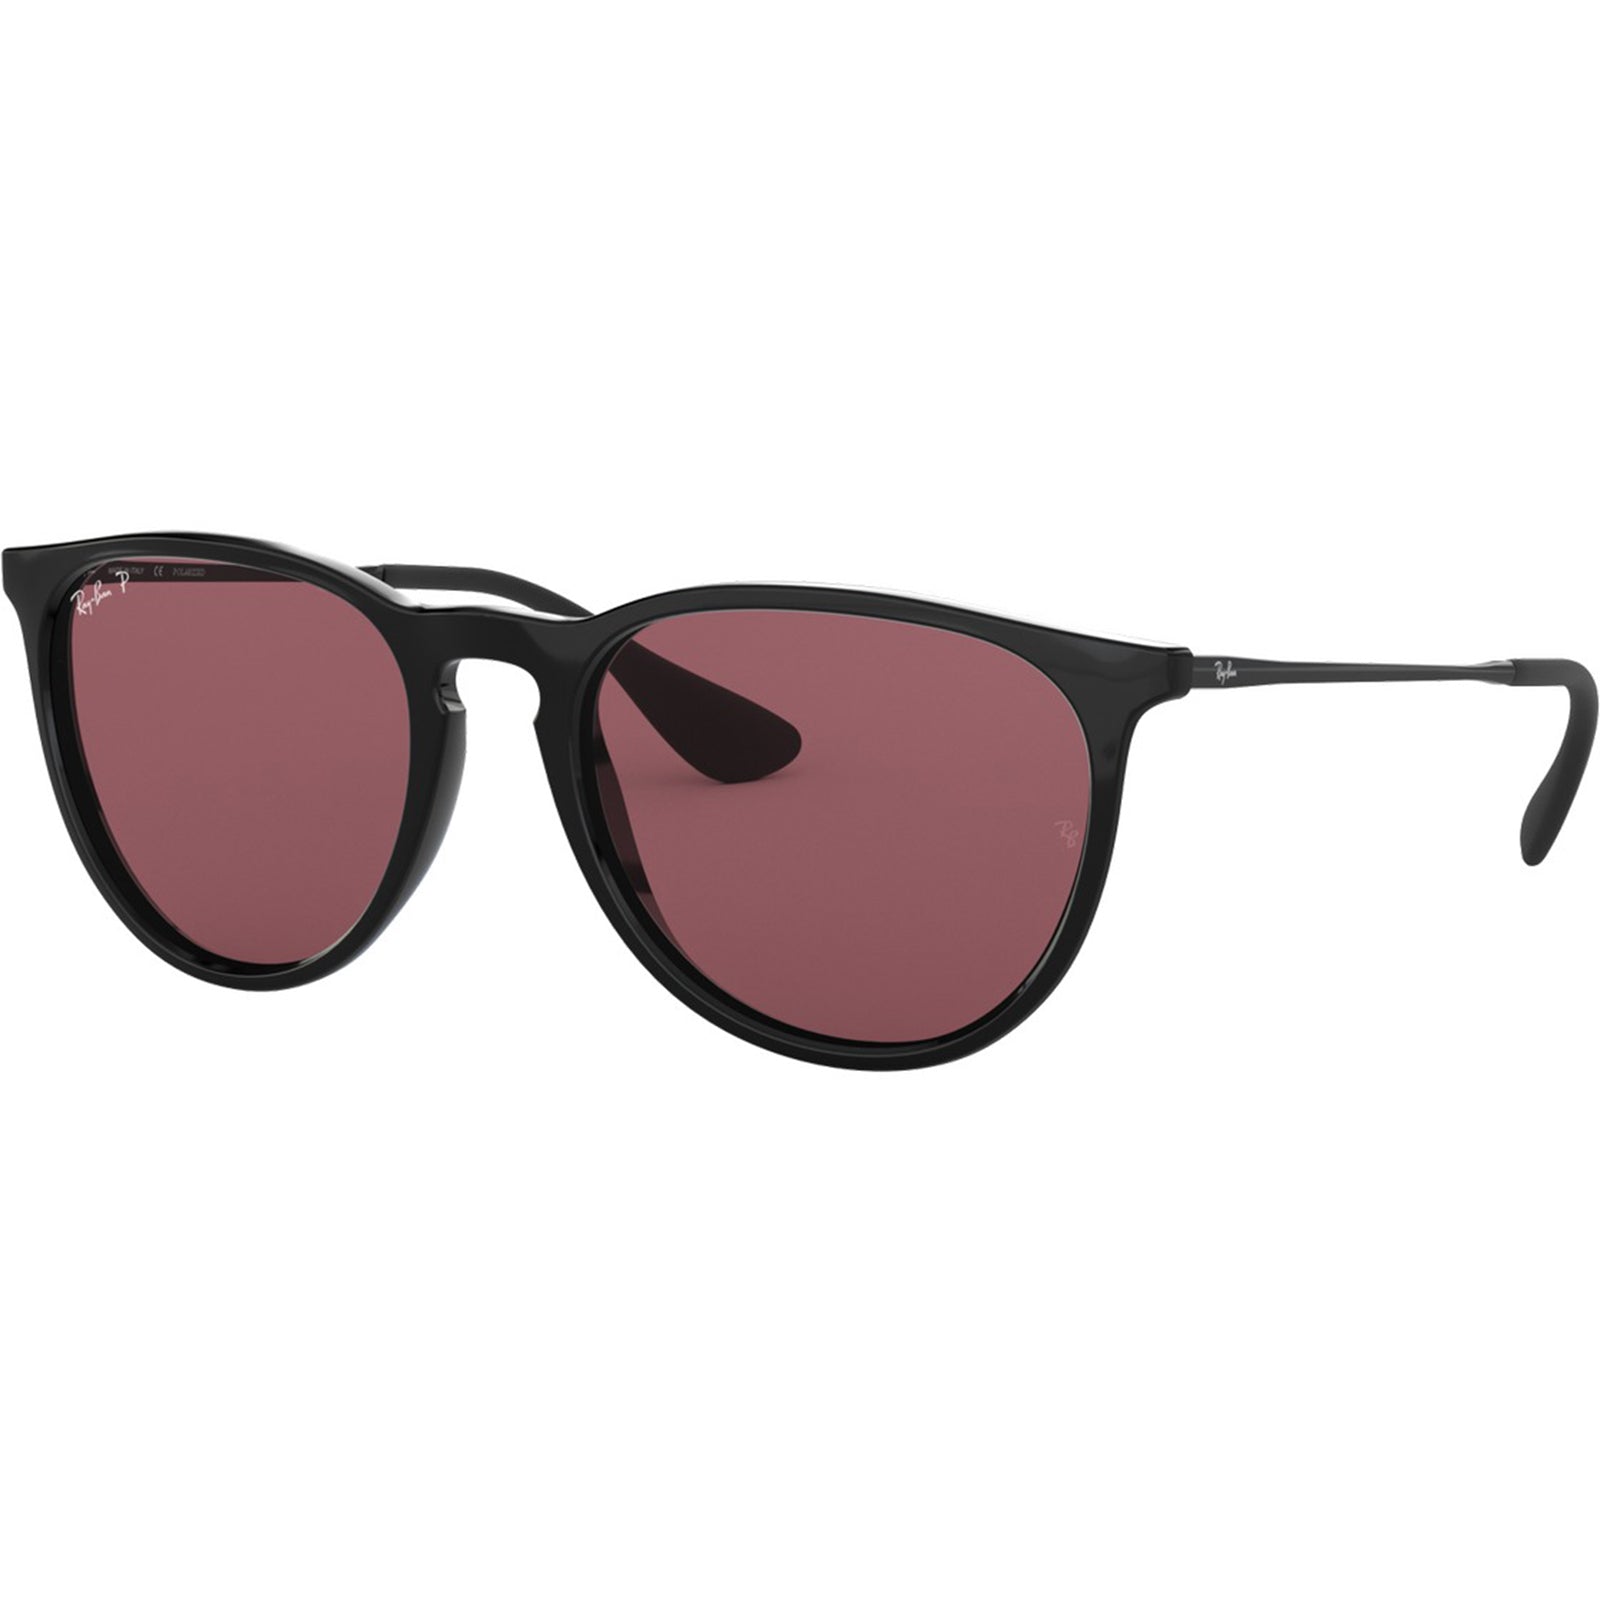 Ray-Ban Erika Classic Adult Lifestyle Polarized Sunglasses-0RB4171